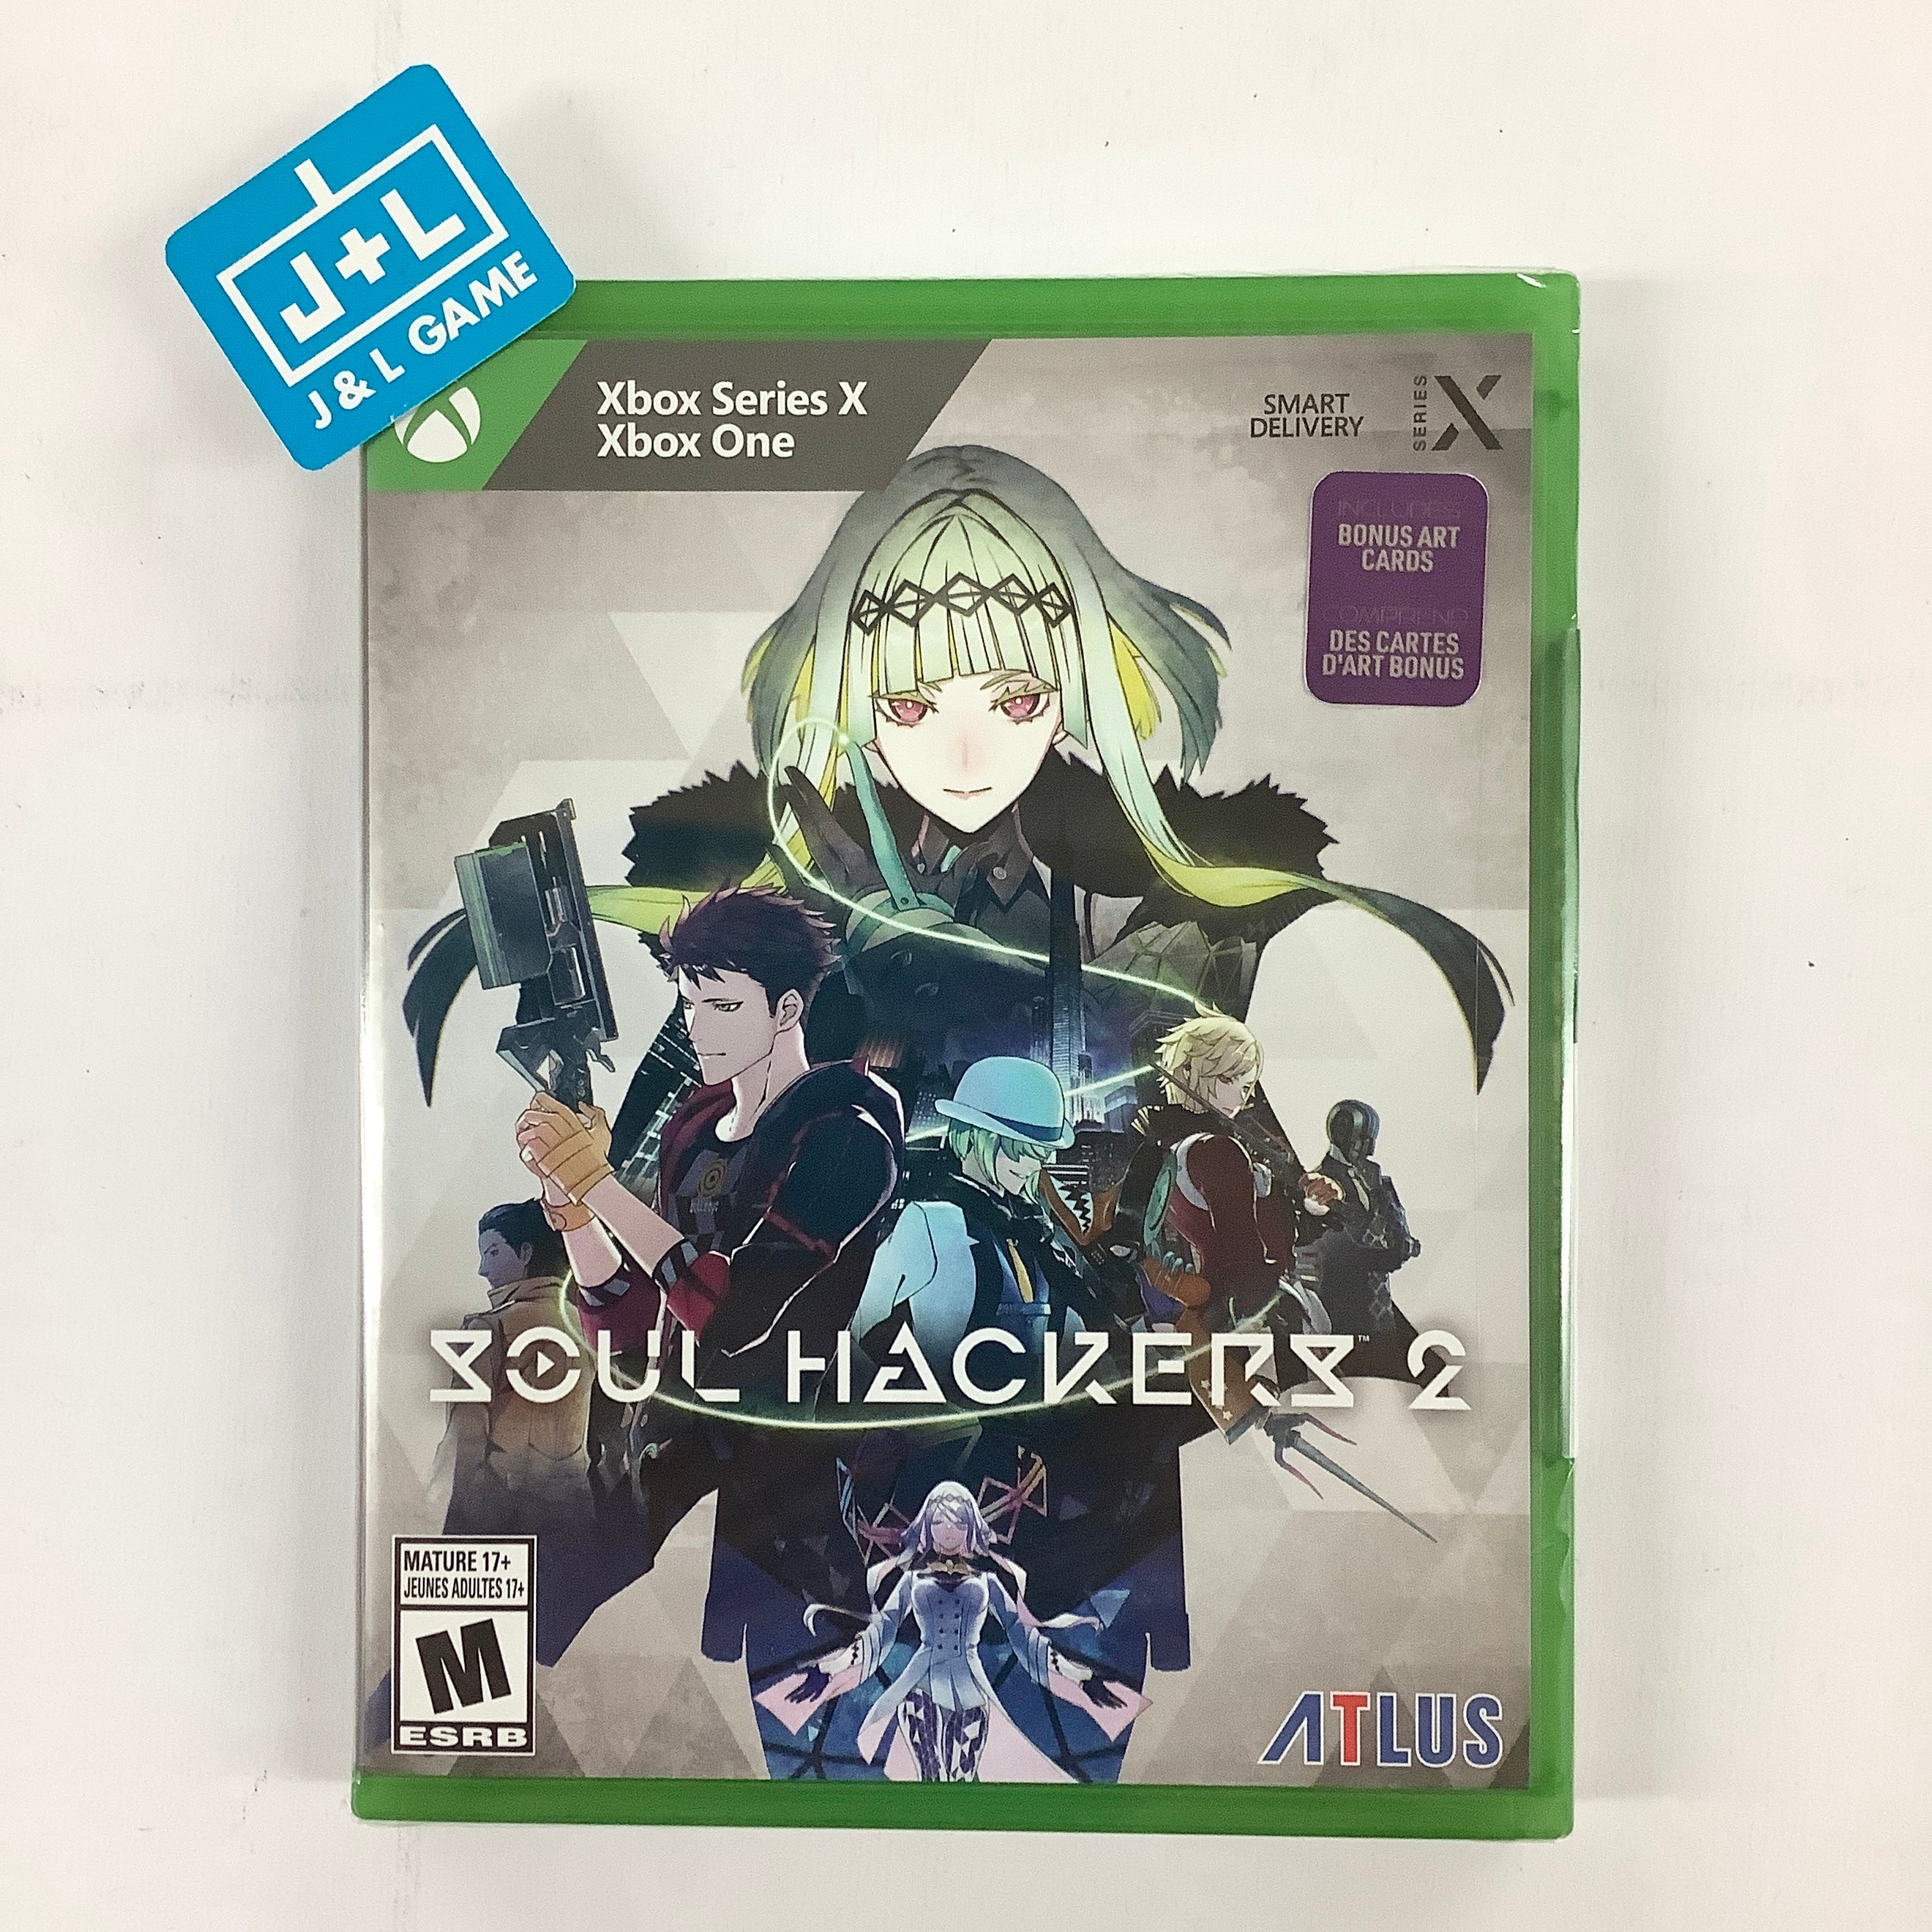 Soul Hackers 2: Launch Edition - (XSX) Xbox Series X Video Games SEGA   